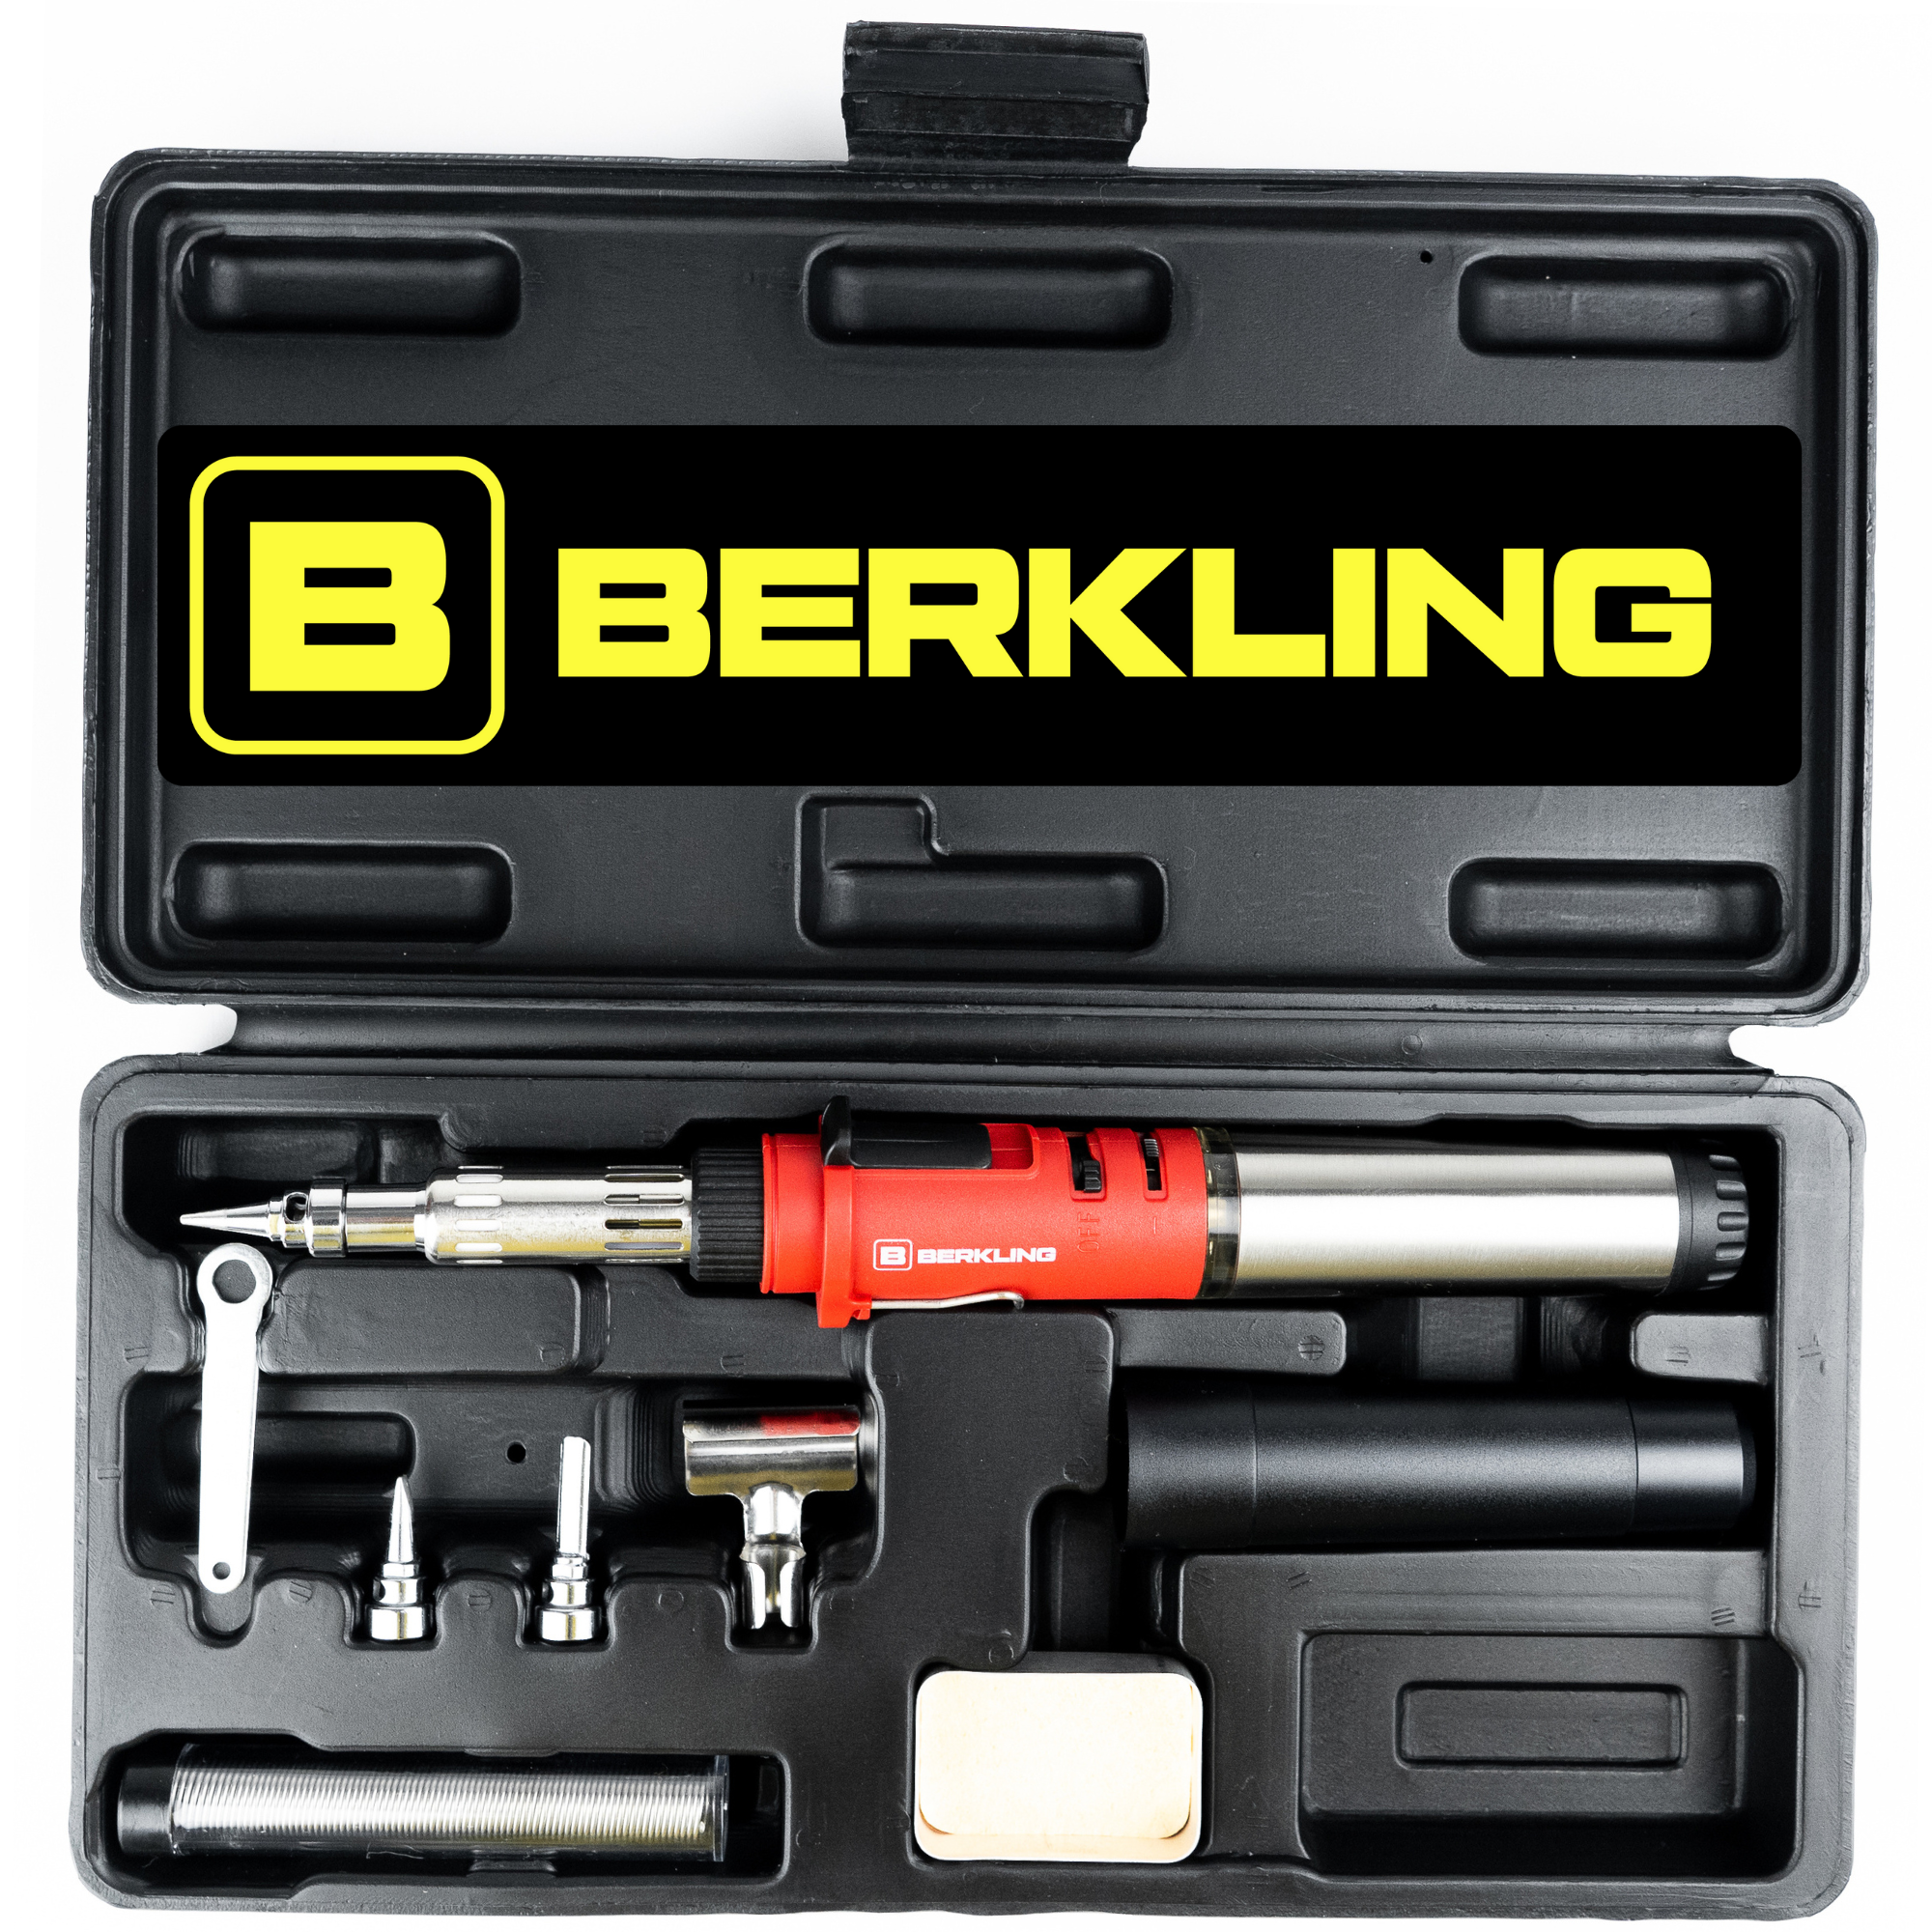 Berkling BSG-668 Premium Butane Soldering Iron Kit include soldering iron, professional tips and carrying case